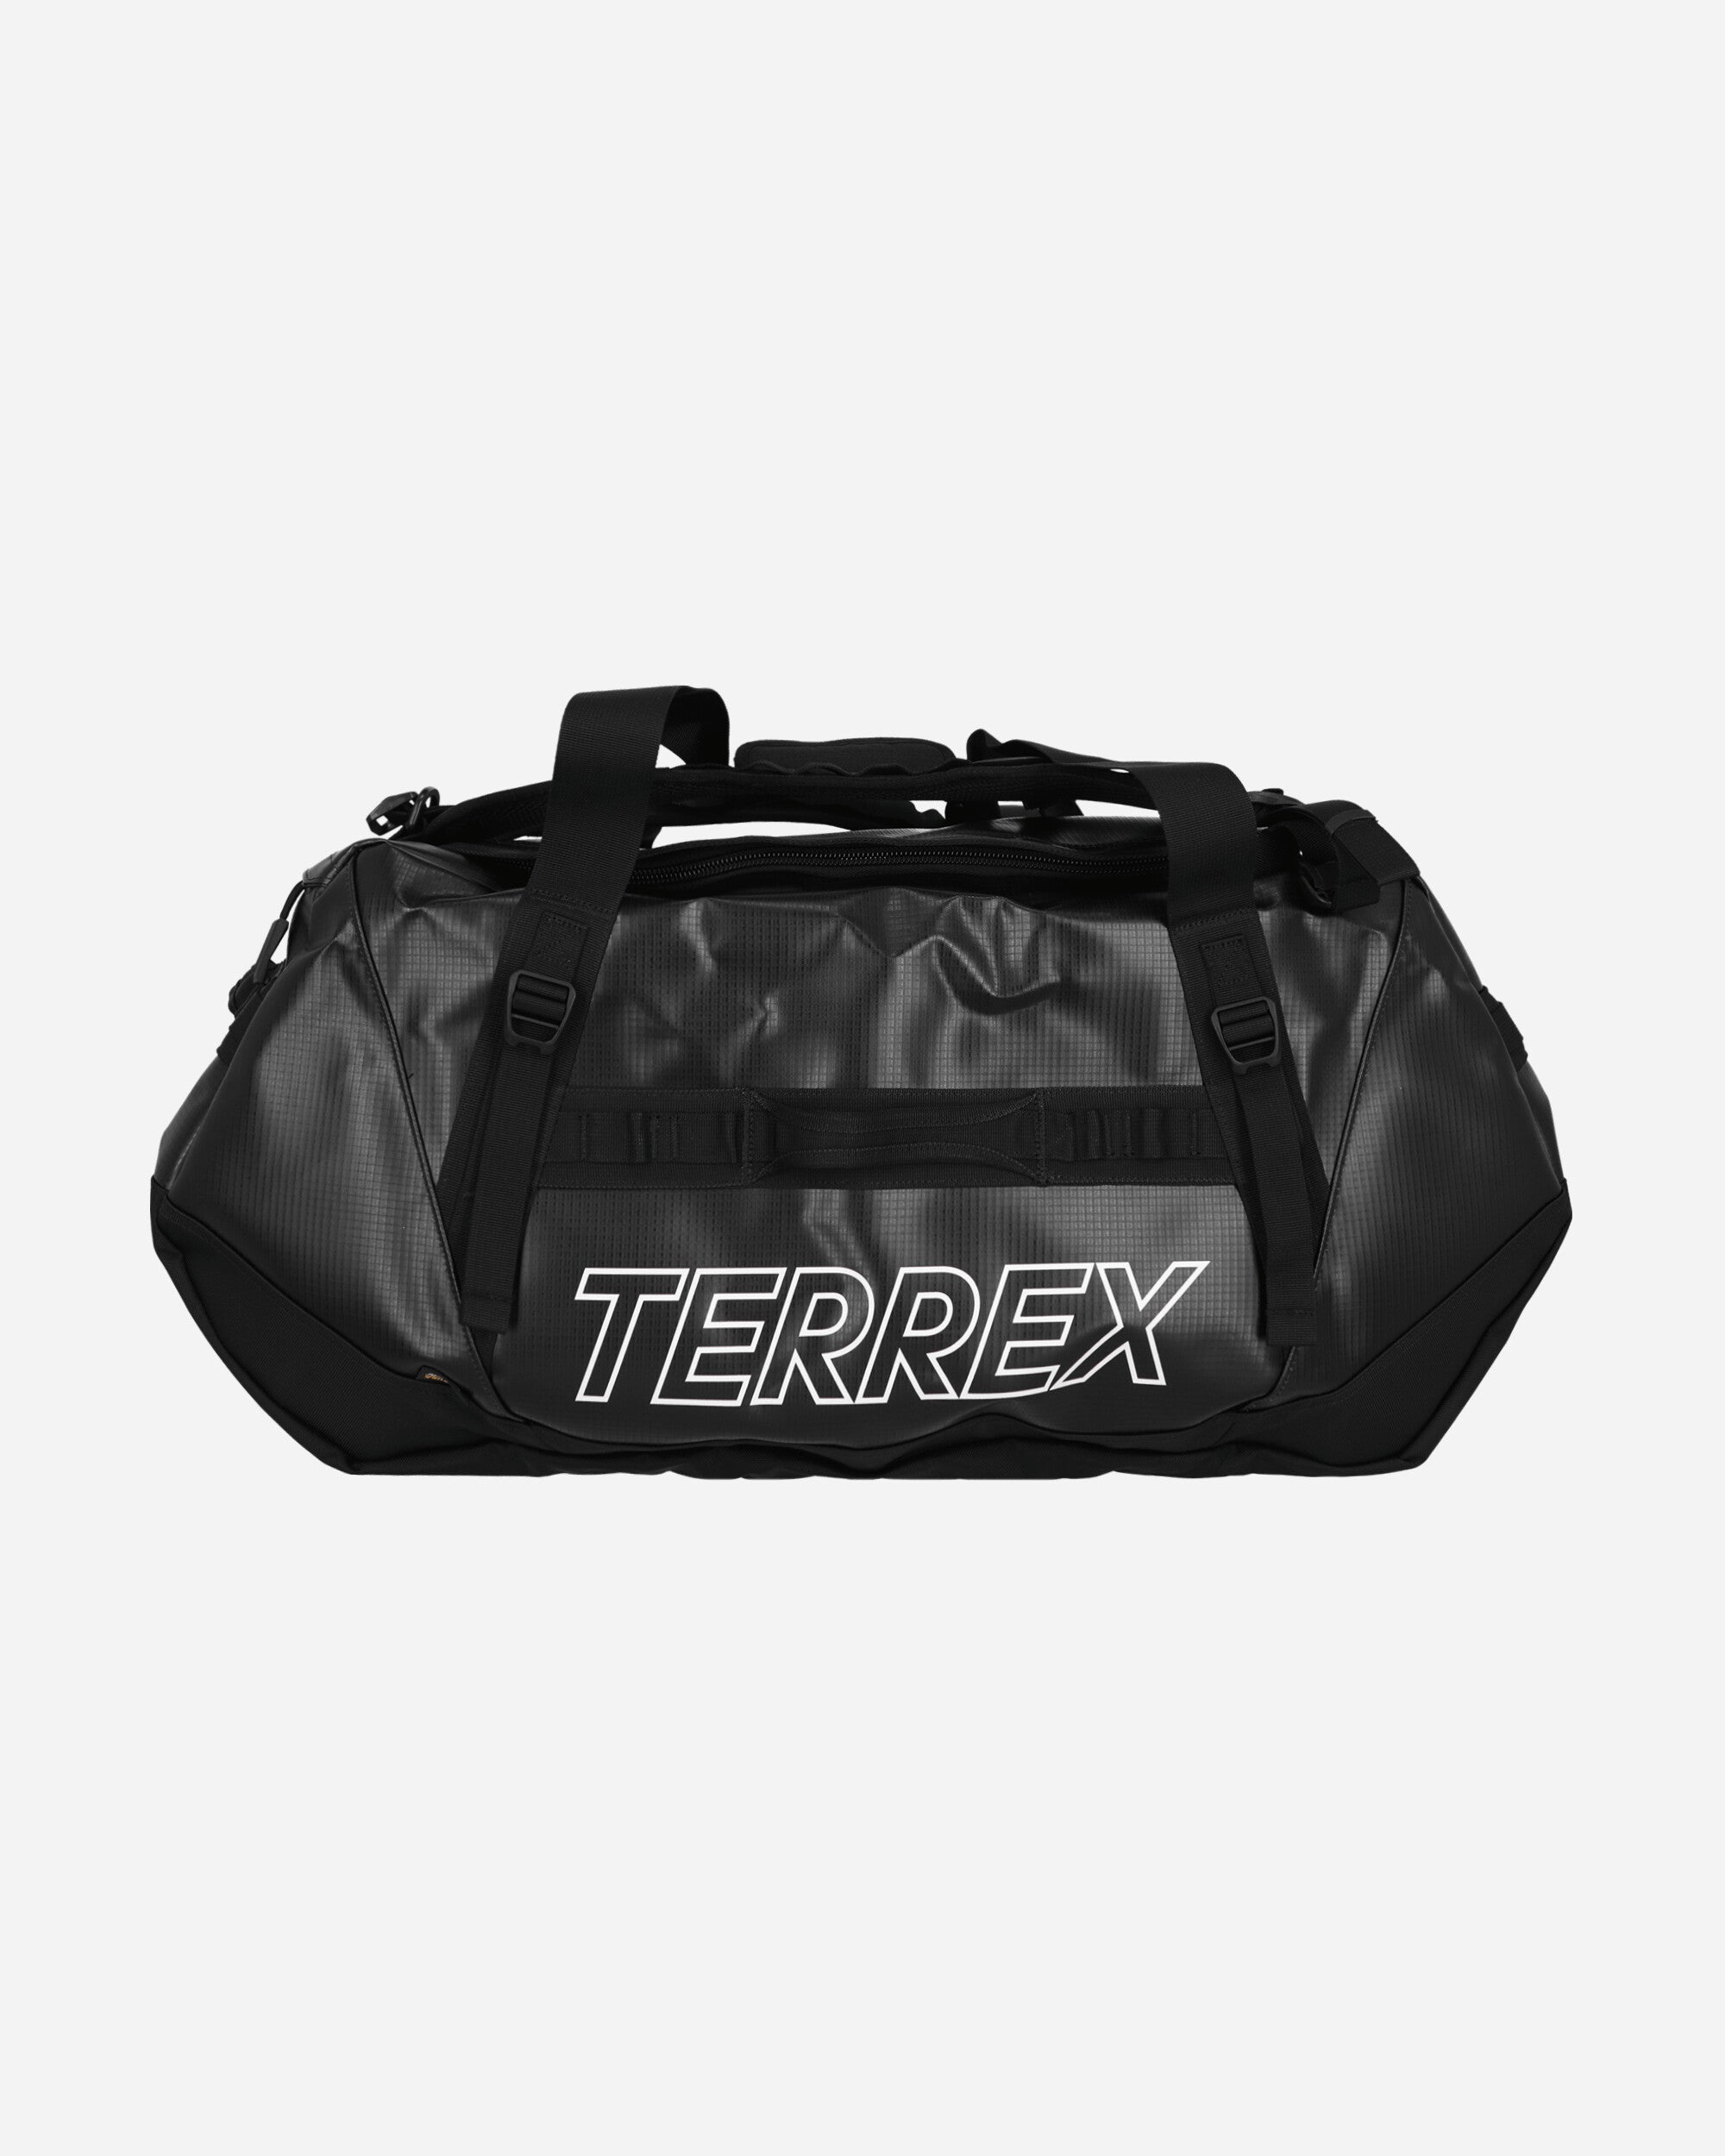 TERREX Expedition Duffel Bag Large Black - 2